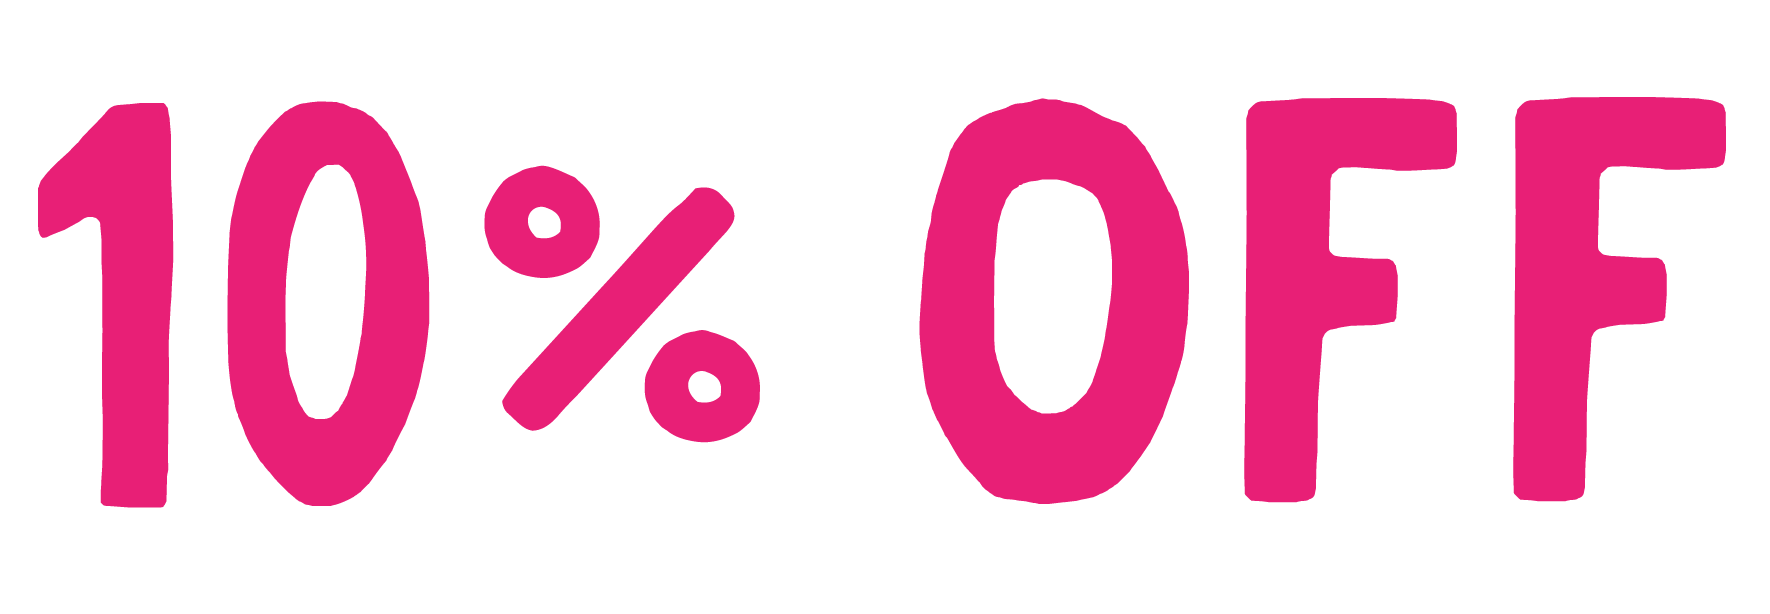 *10% off!